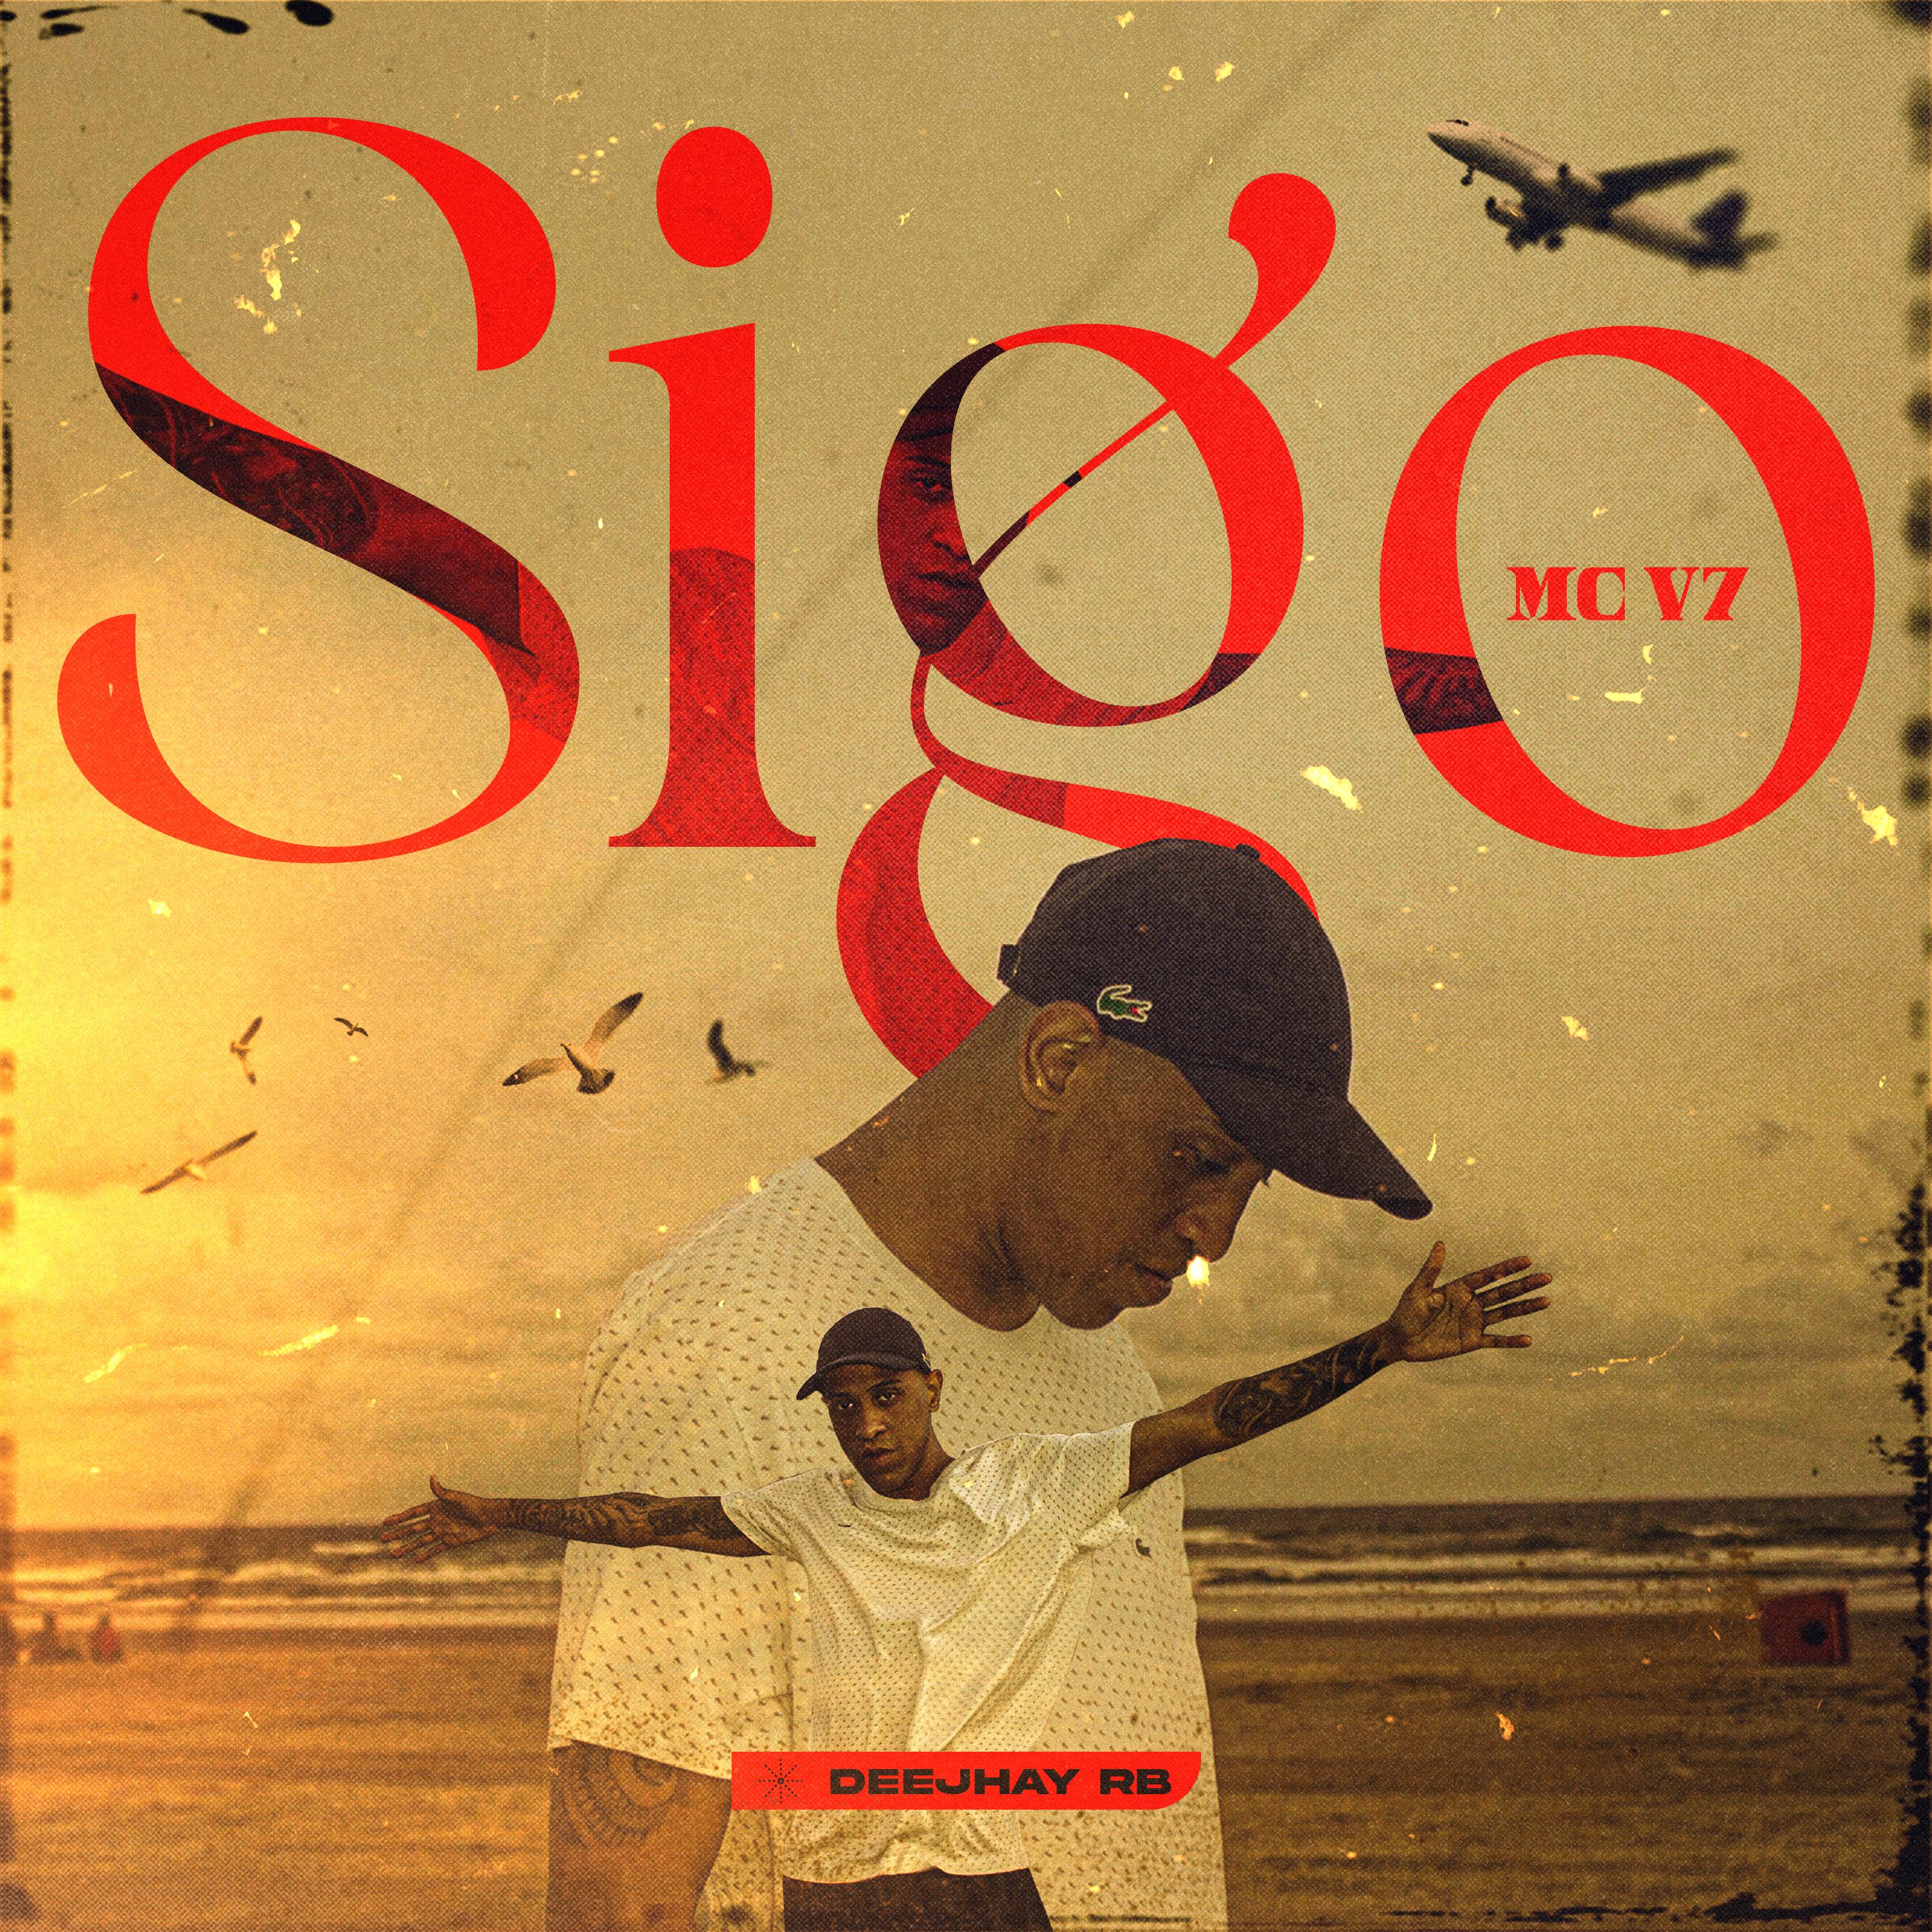 Постер альбома Sigo